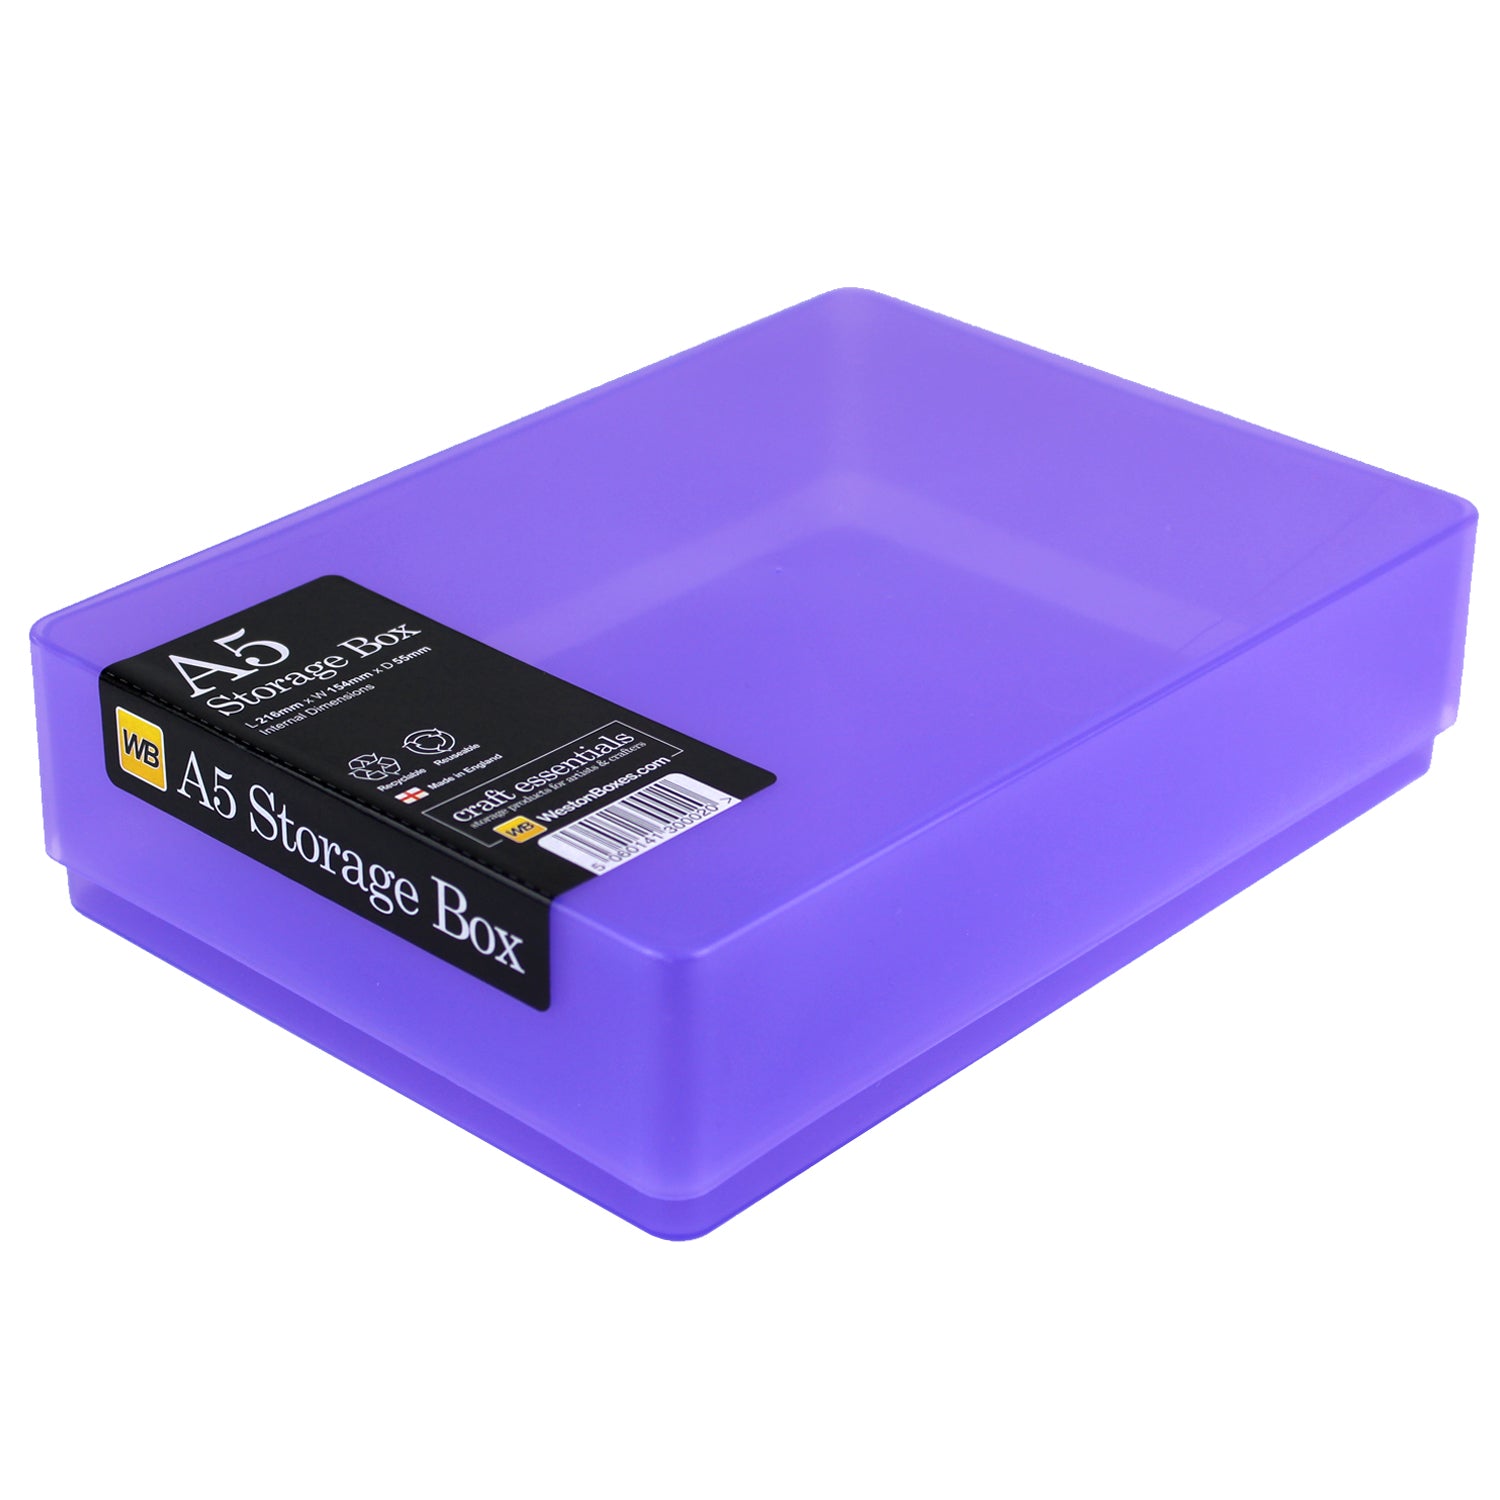 Slim A5 Storage BoxWhite / Opaque / TOUGH / 5 Boxes